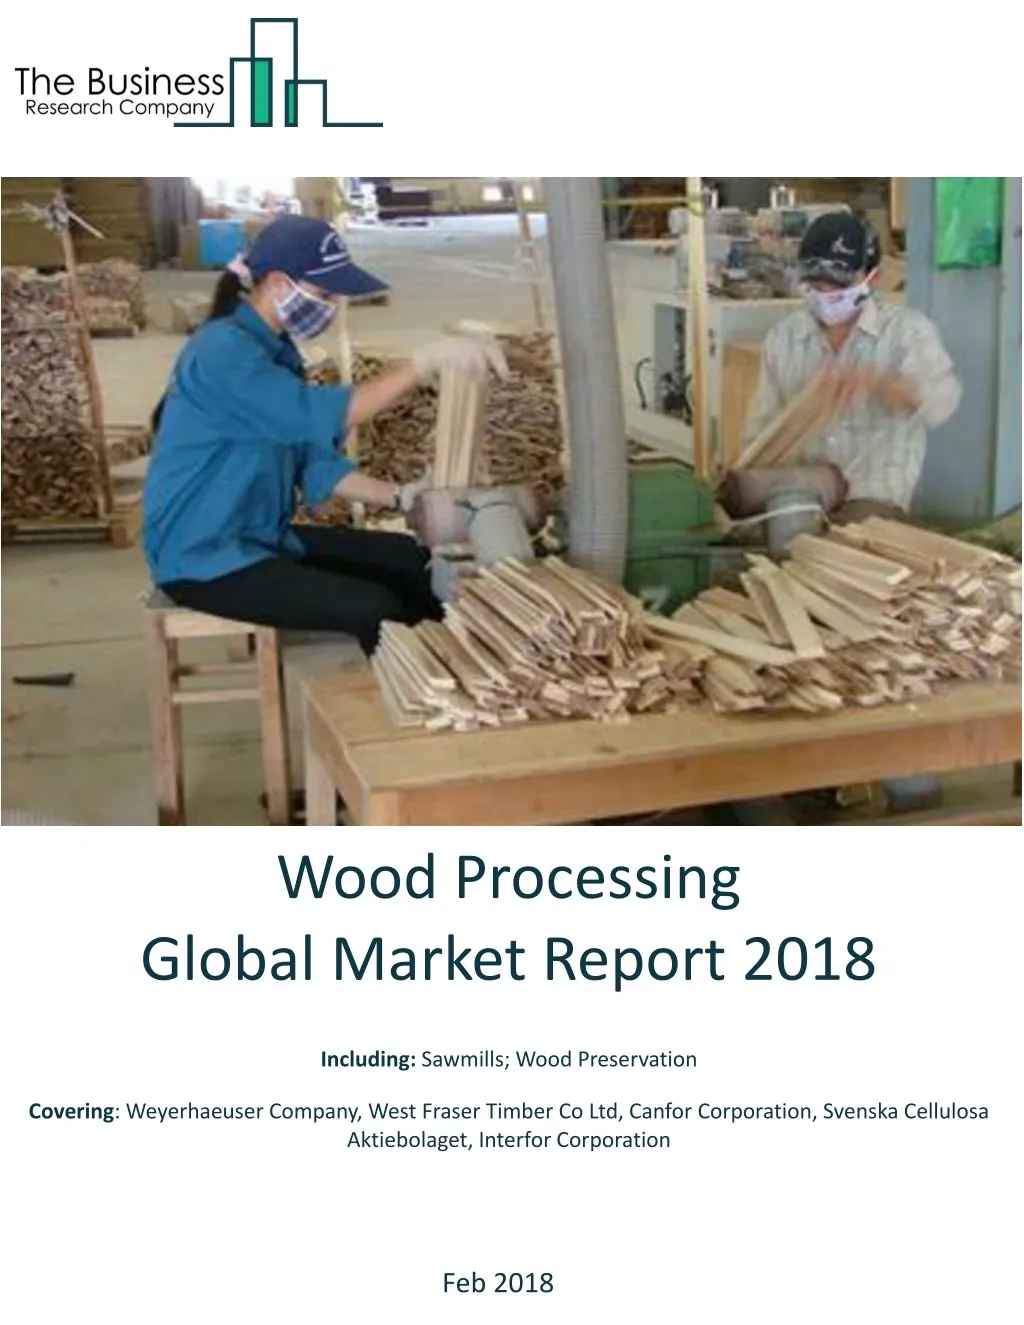 wood processing global market report 2018